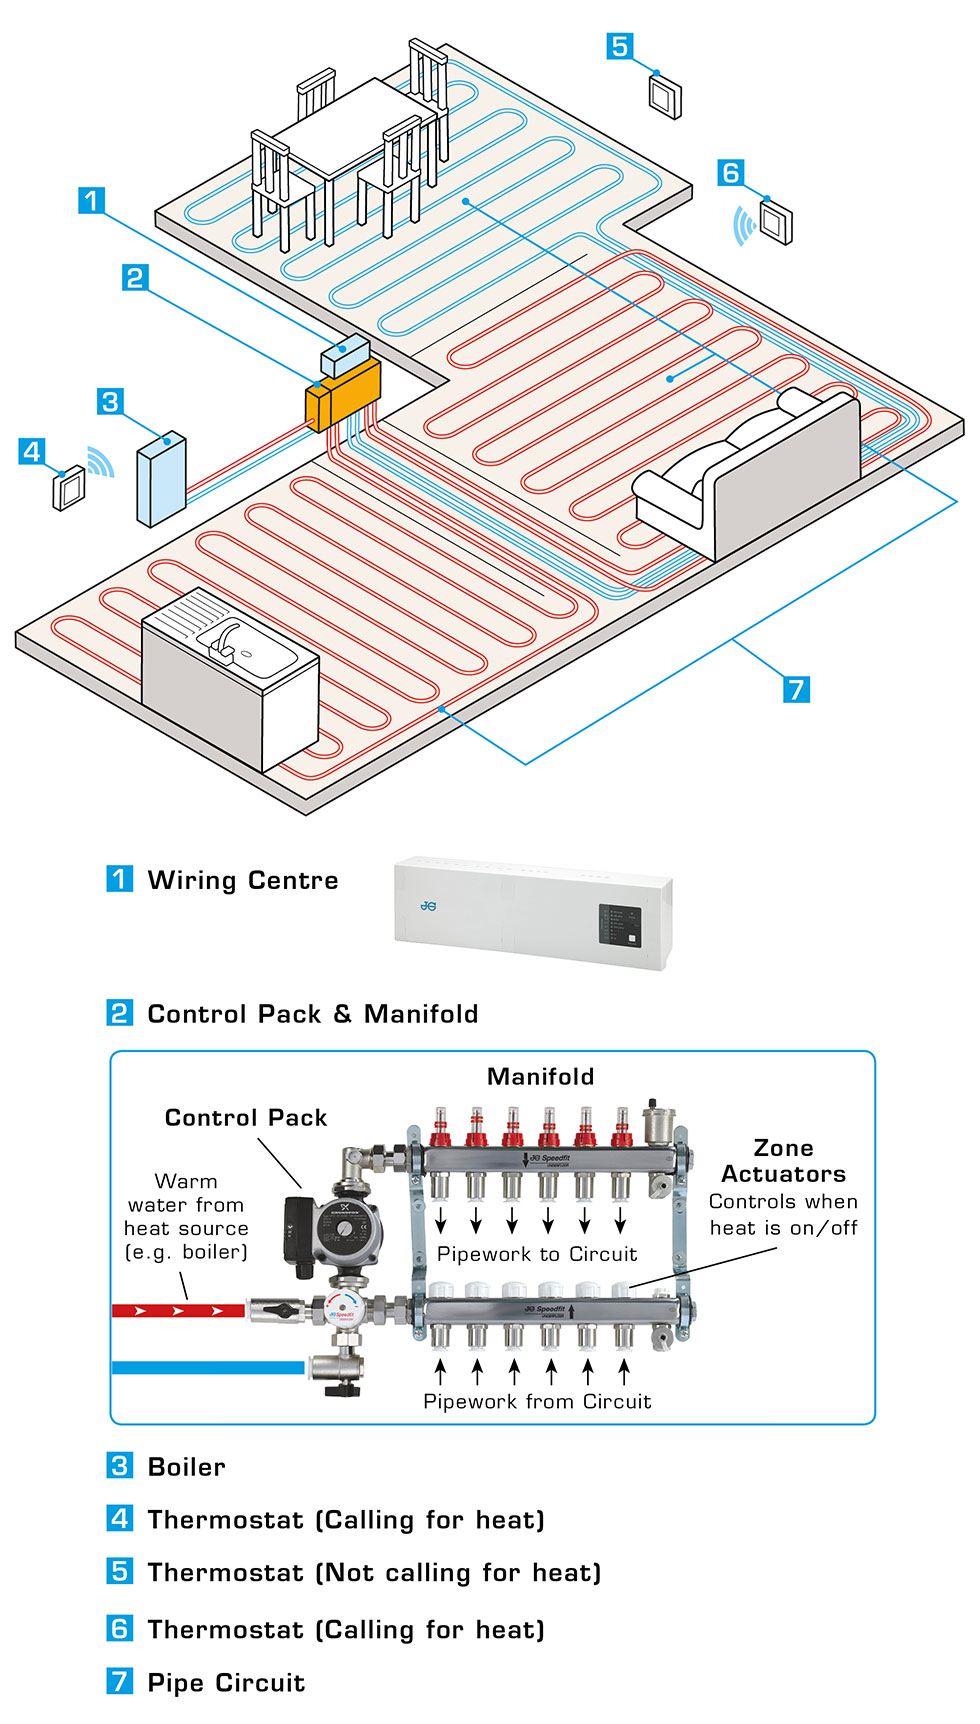 Underfloor Heating Systems Work: key components